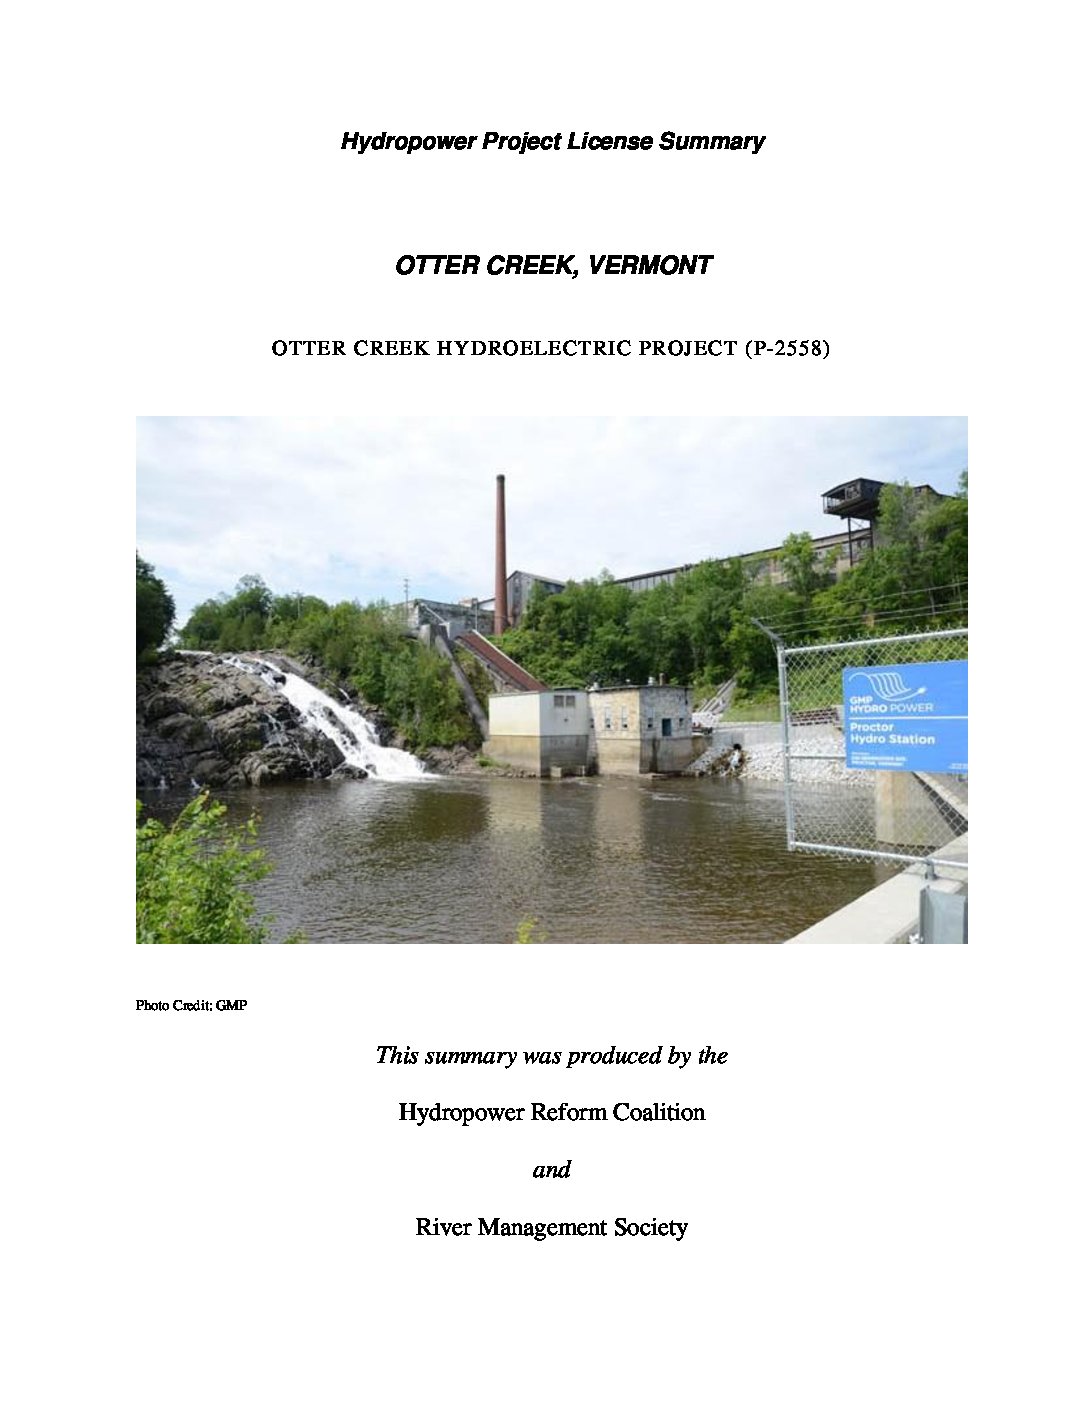 Otter Creek Project, Otter Creek, Vermont